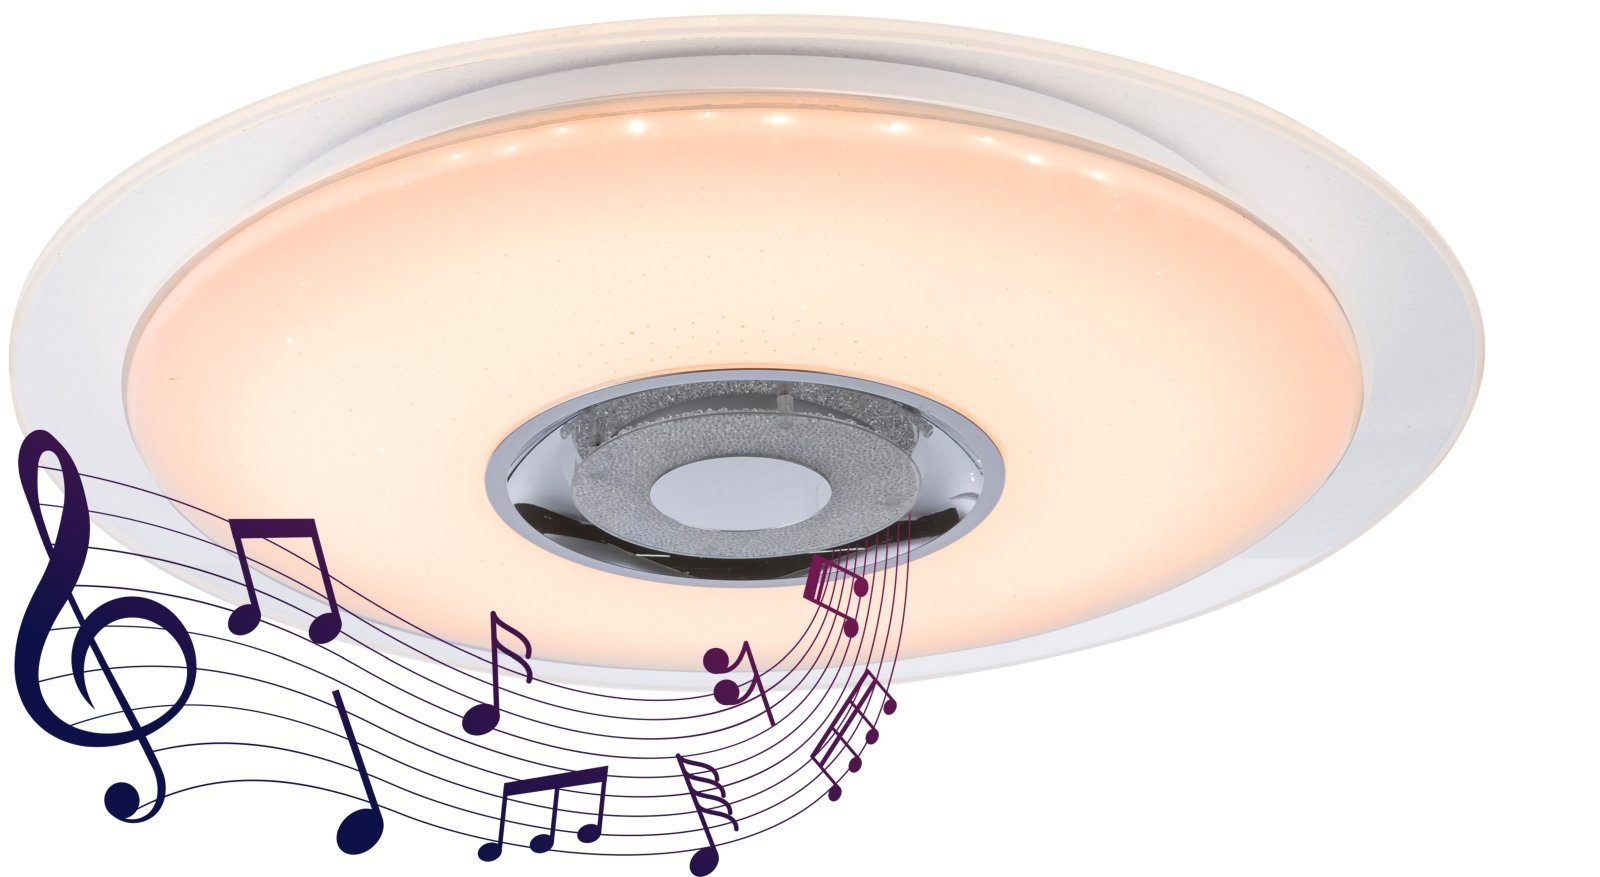 LED Lautsprecher Globo Wohnzimmer Deckenleuchte Deckenleuchte Deckenlampe GLOBO Bluetooth